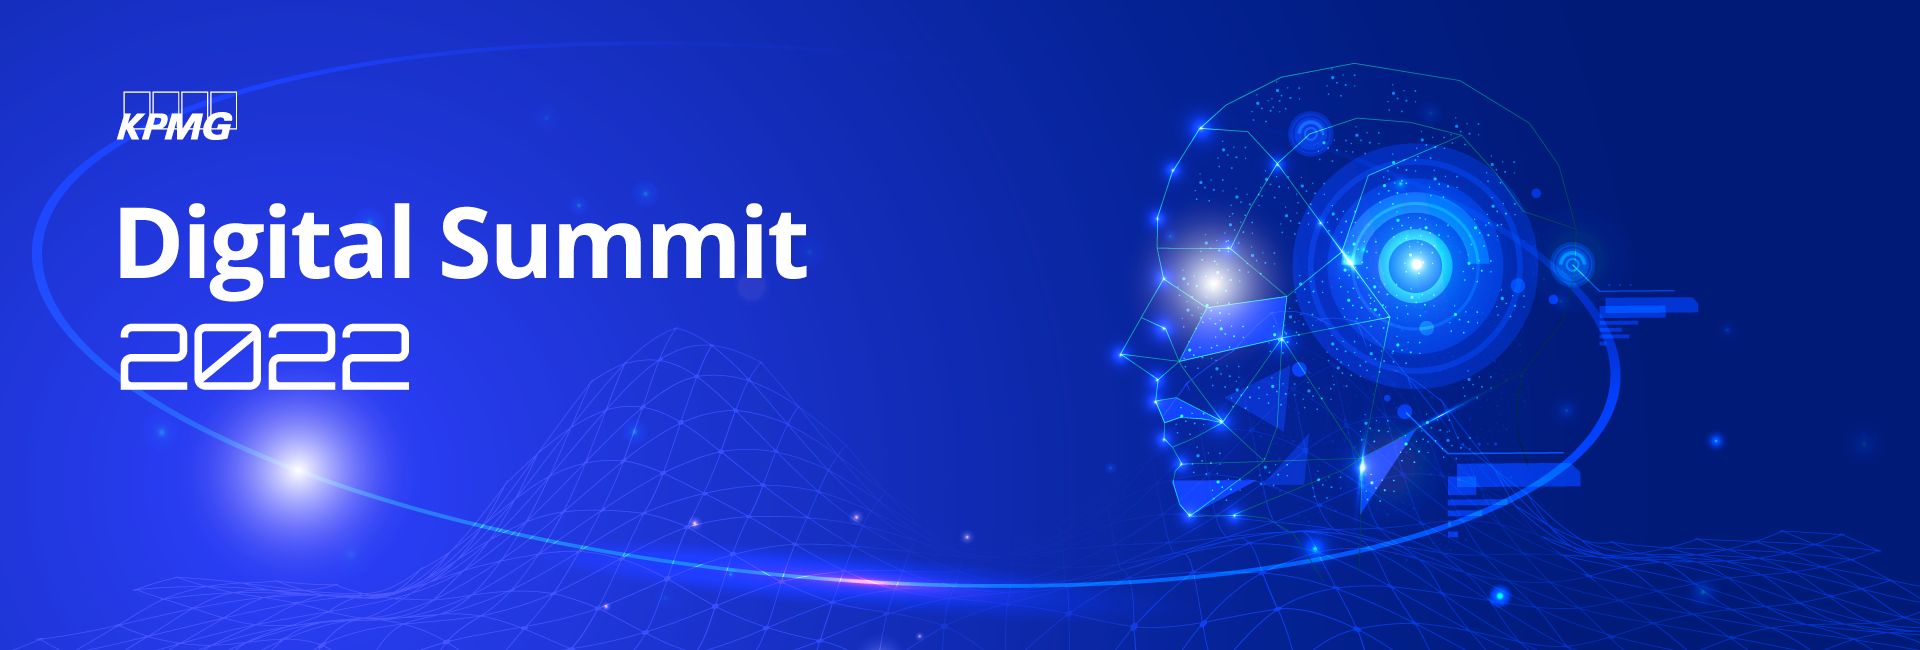 Digital Summit 2022